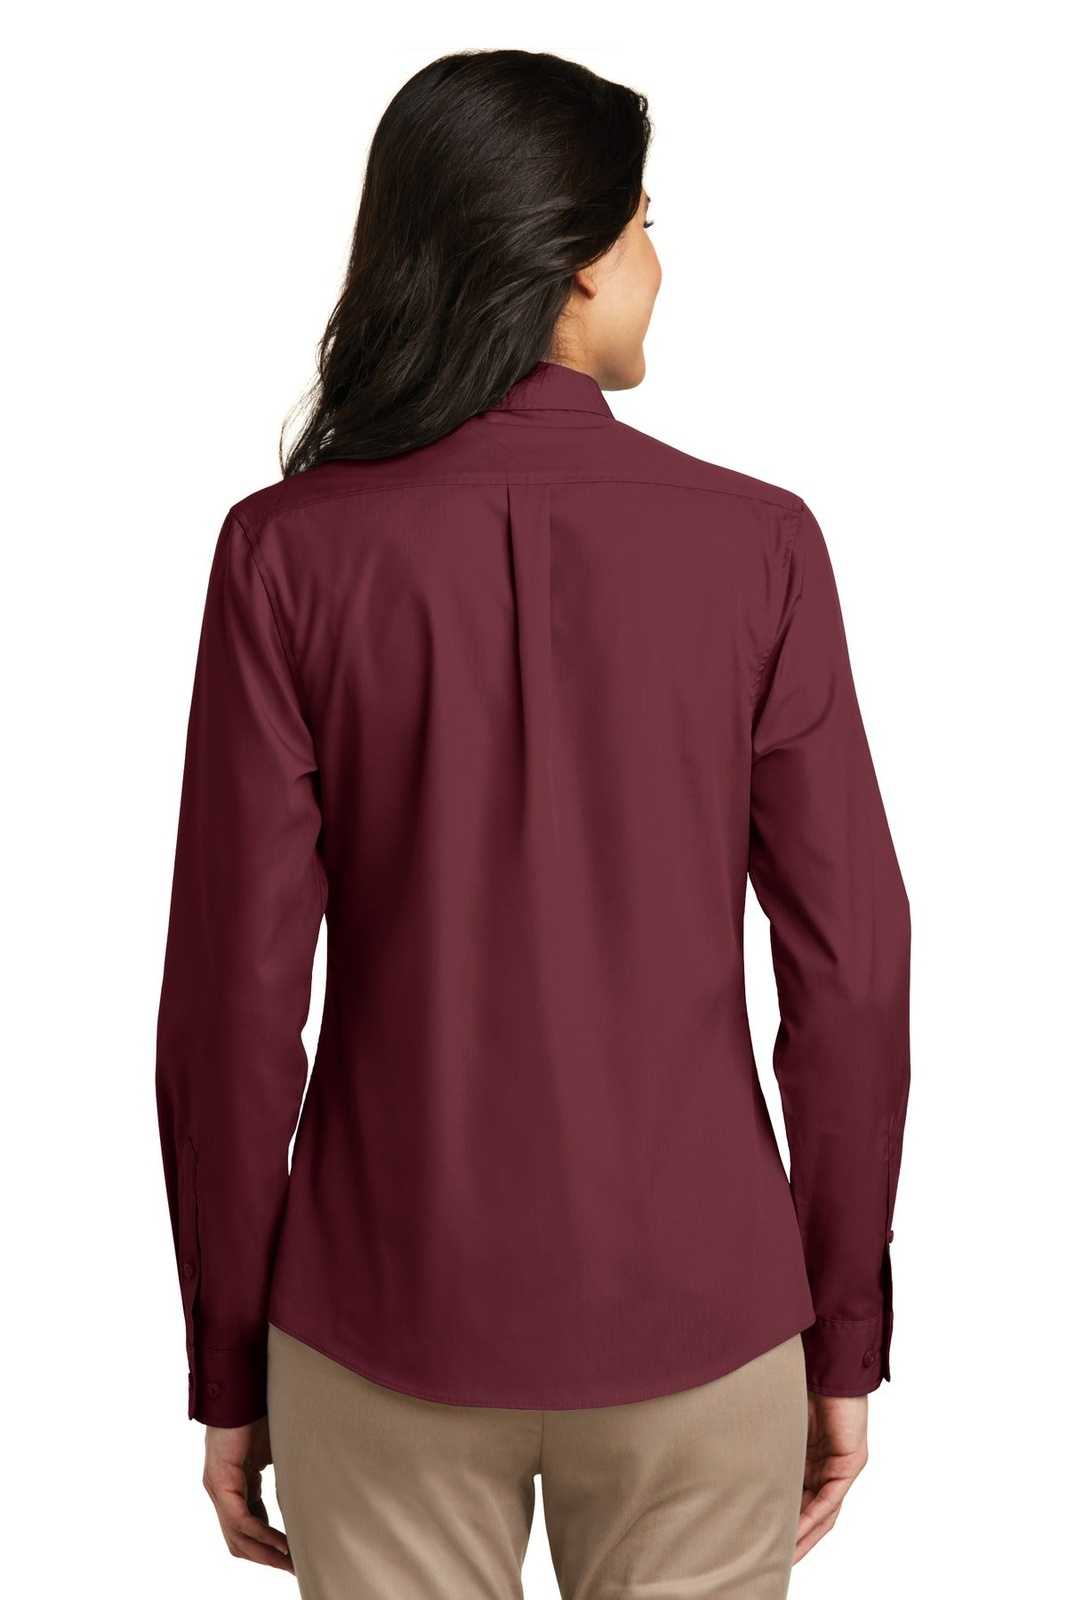 Port Authority LW100 Ladies Long Sleeve Carefree Poplin Shirt - Burgundy - HIT a Double - 1